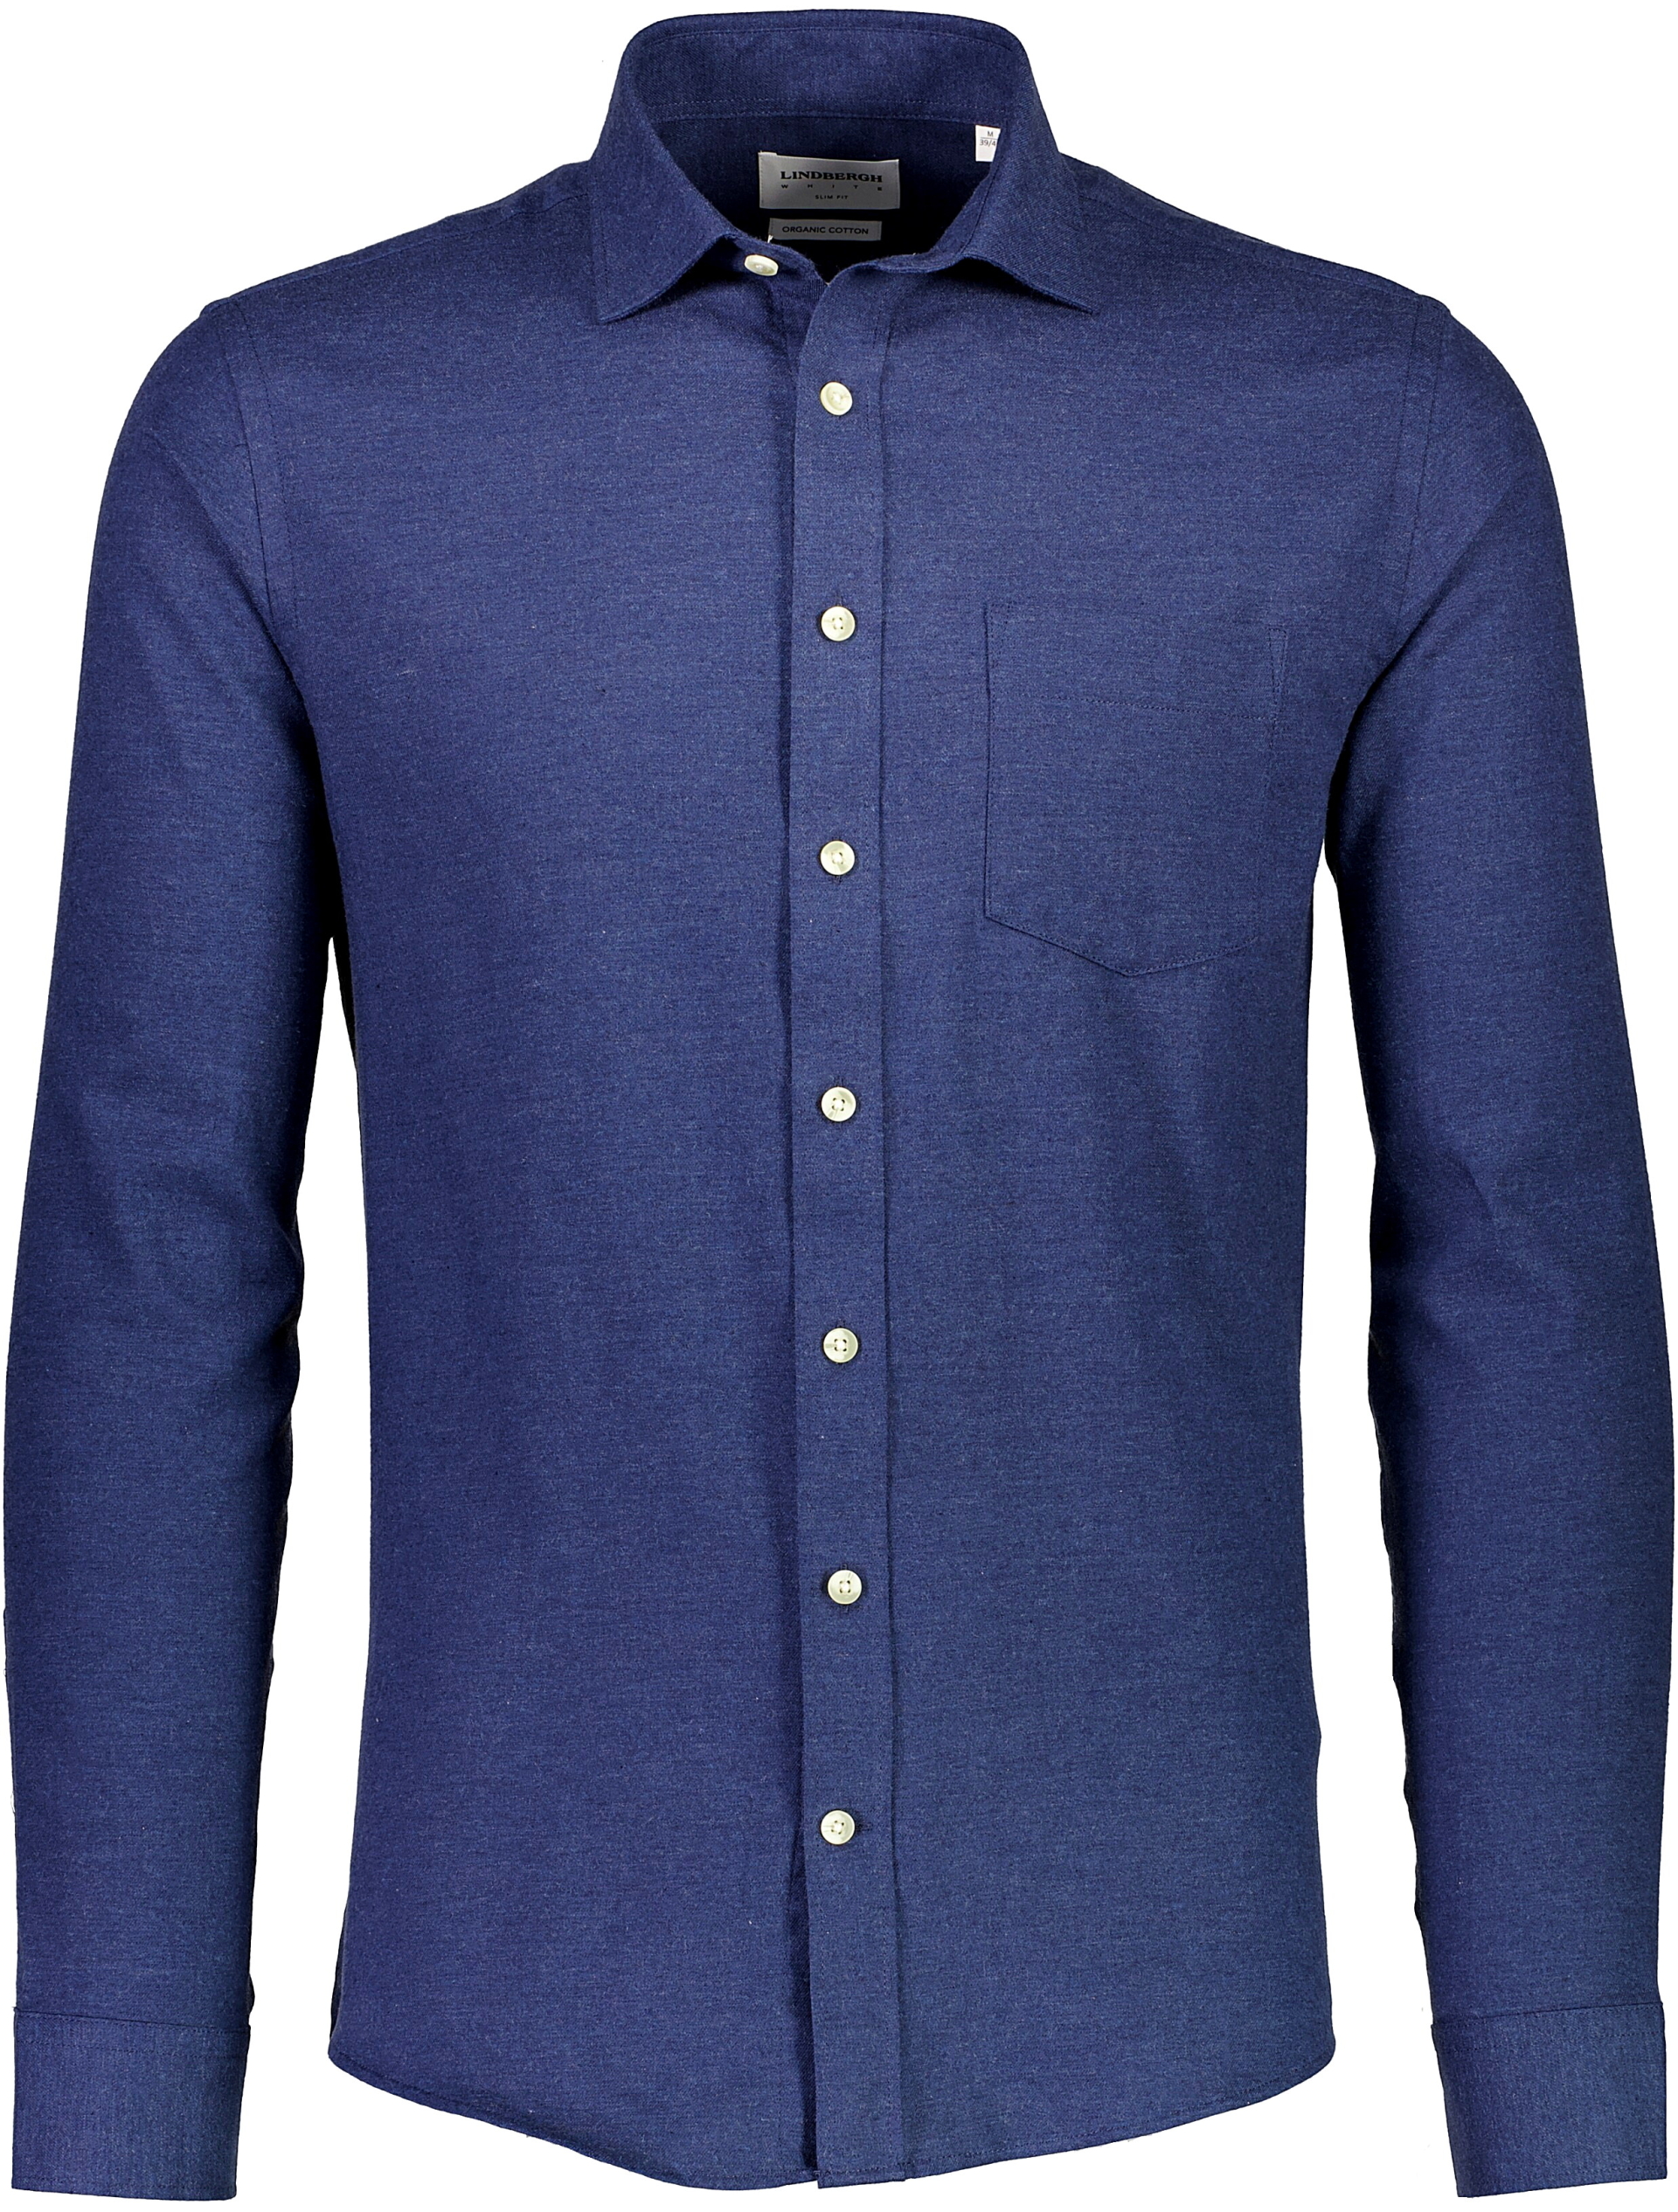 Lindbergh Flannel shirt blue / navy mel